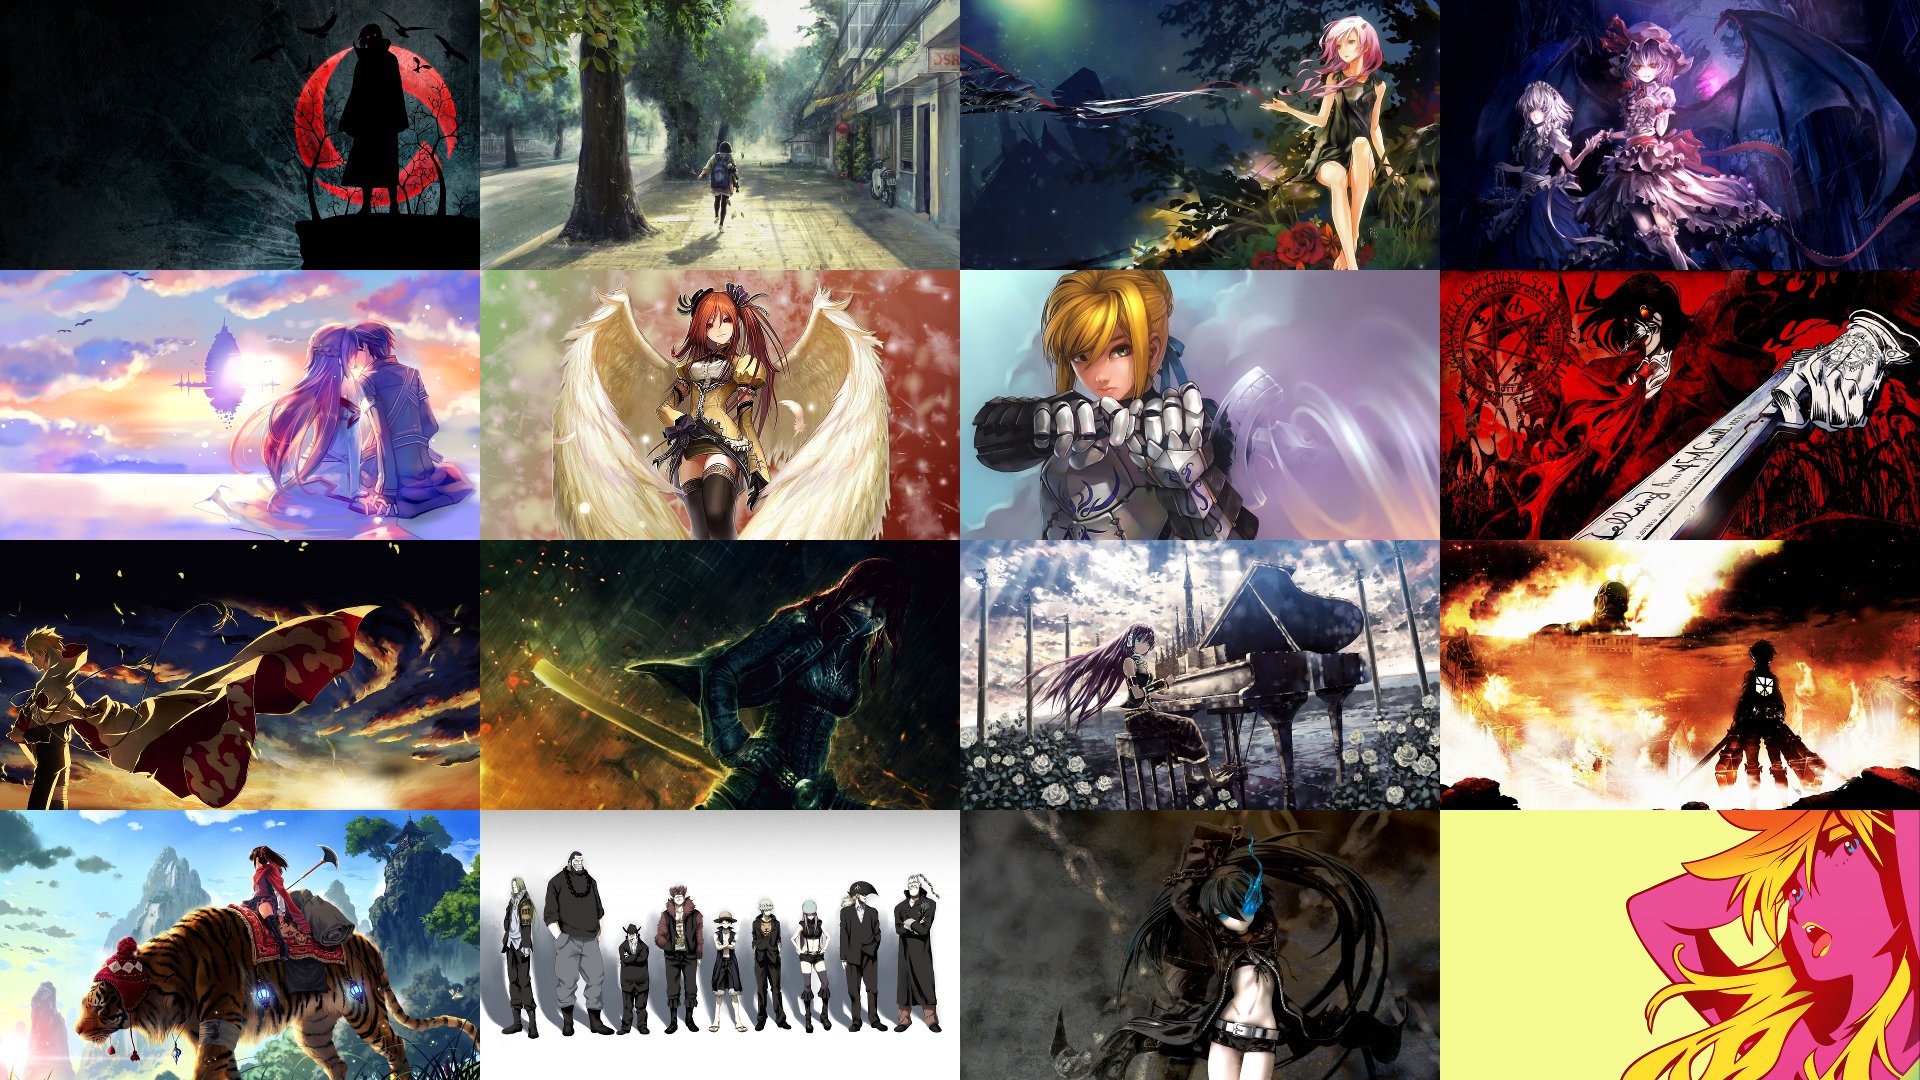 wallpaper de animes hd,action adventure spiel,spiele,kunst,cg kunstwerk,grafikdesign